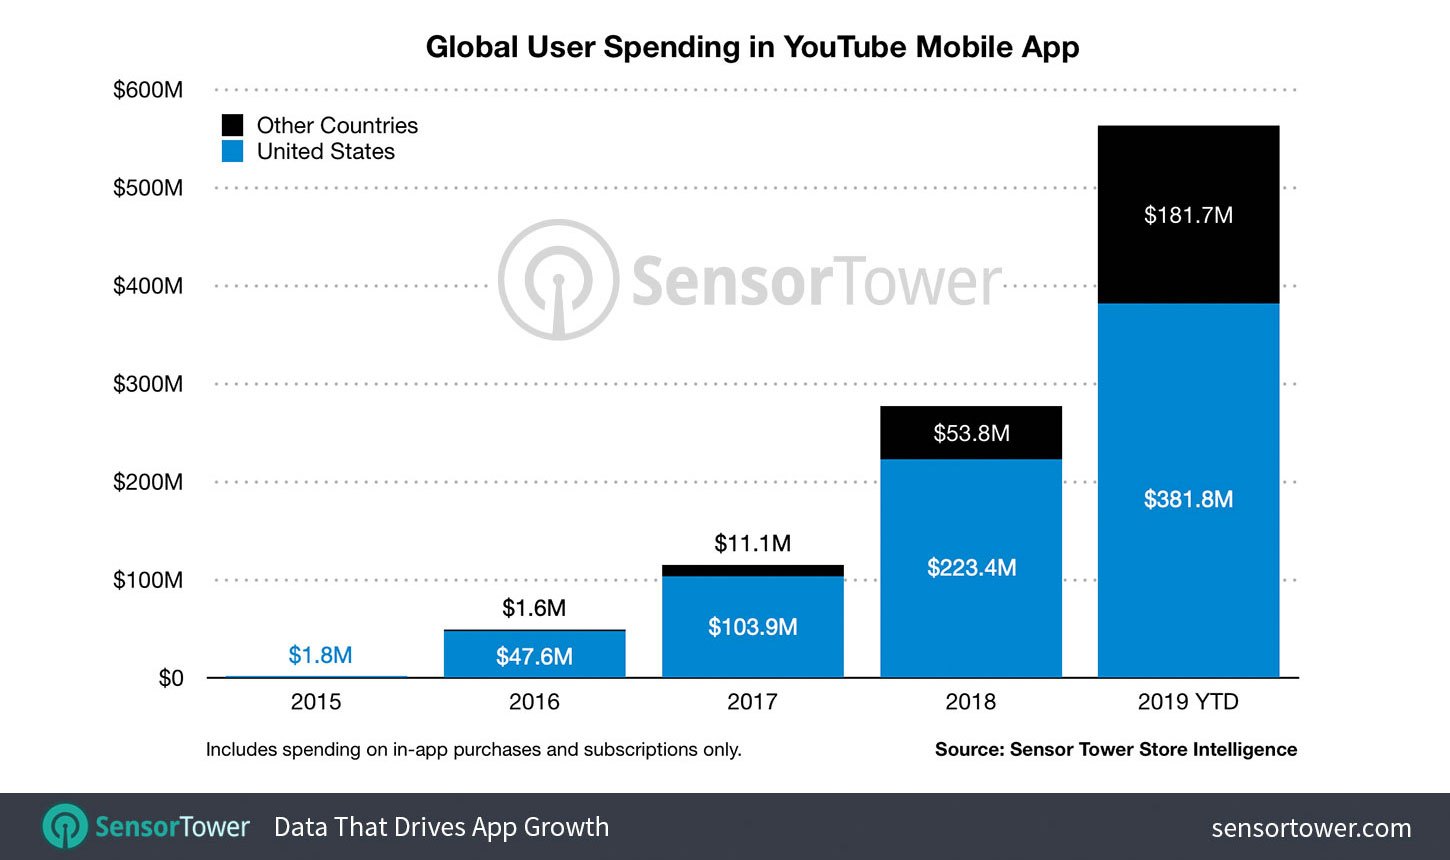 youtube grosses 1 billion in lifetime revenue from in app subscriptions